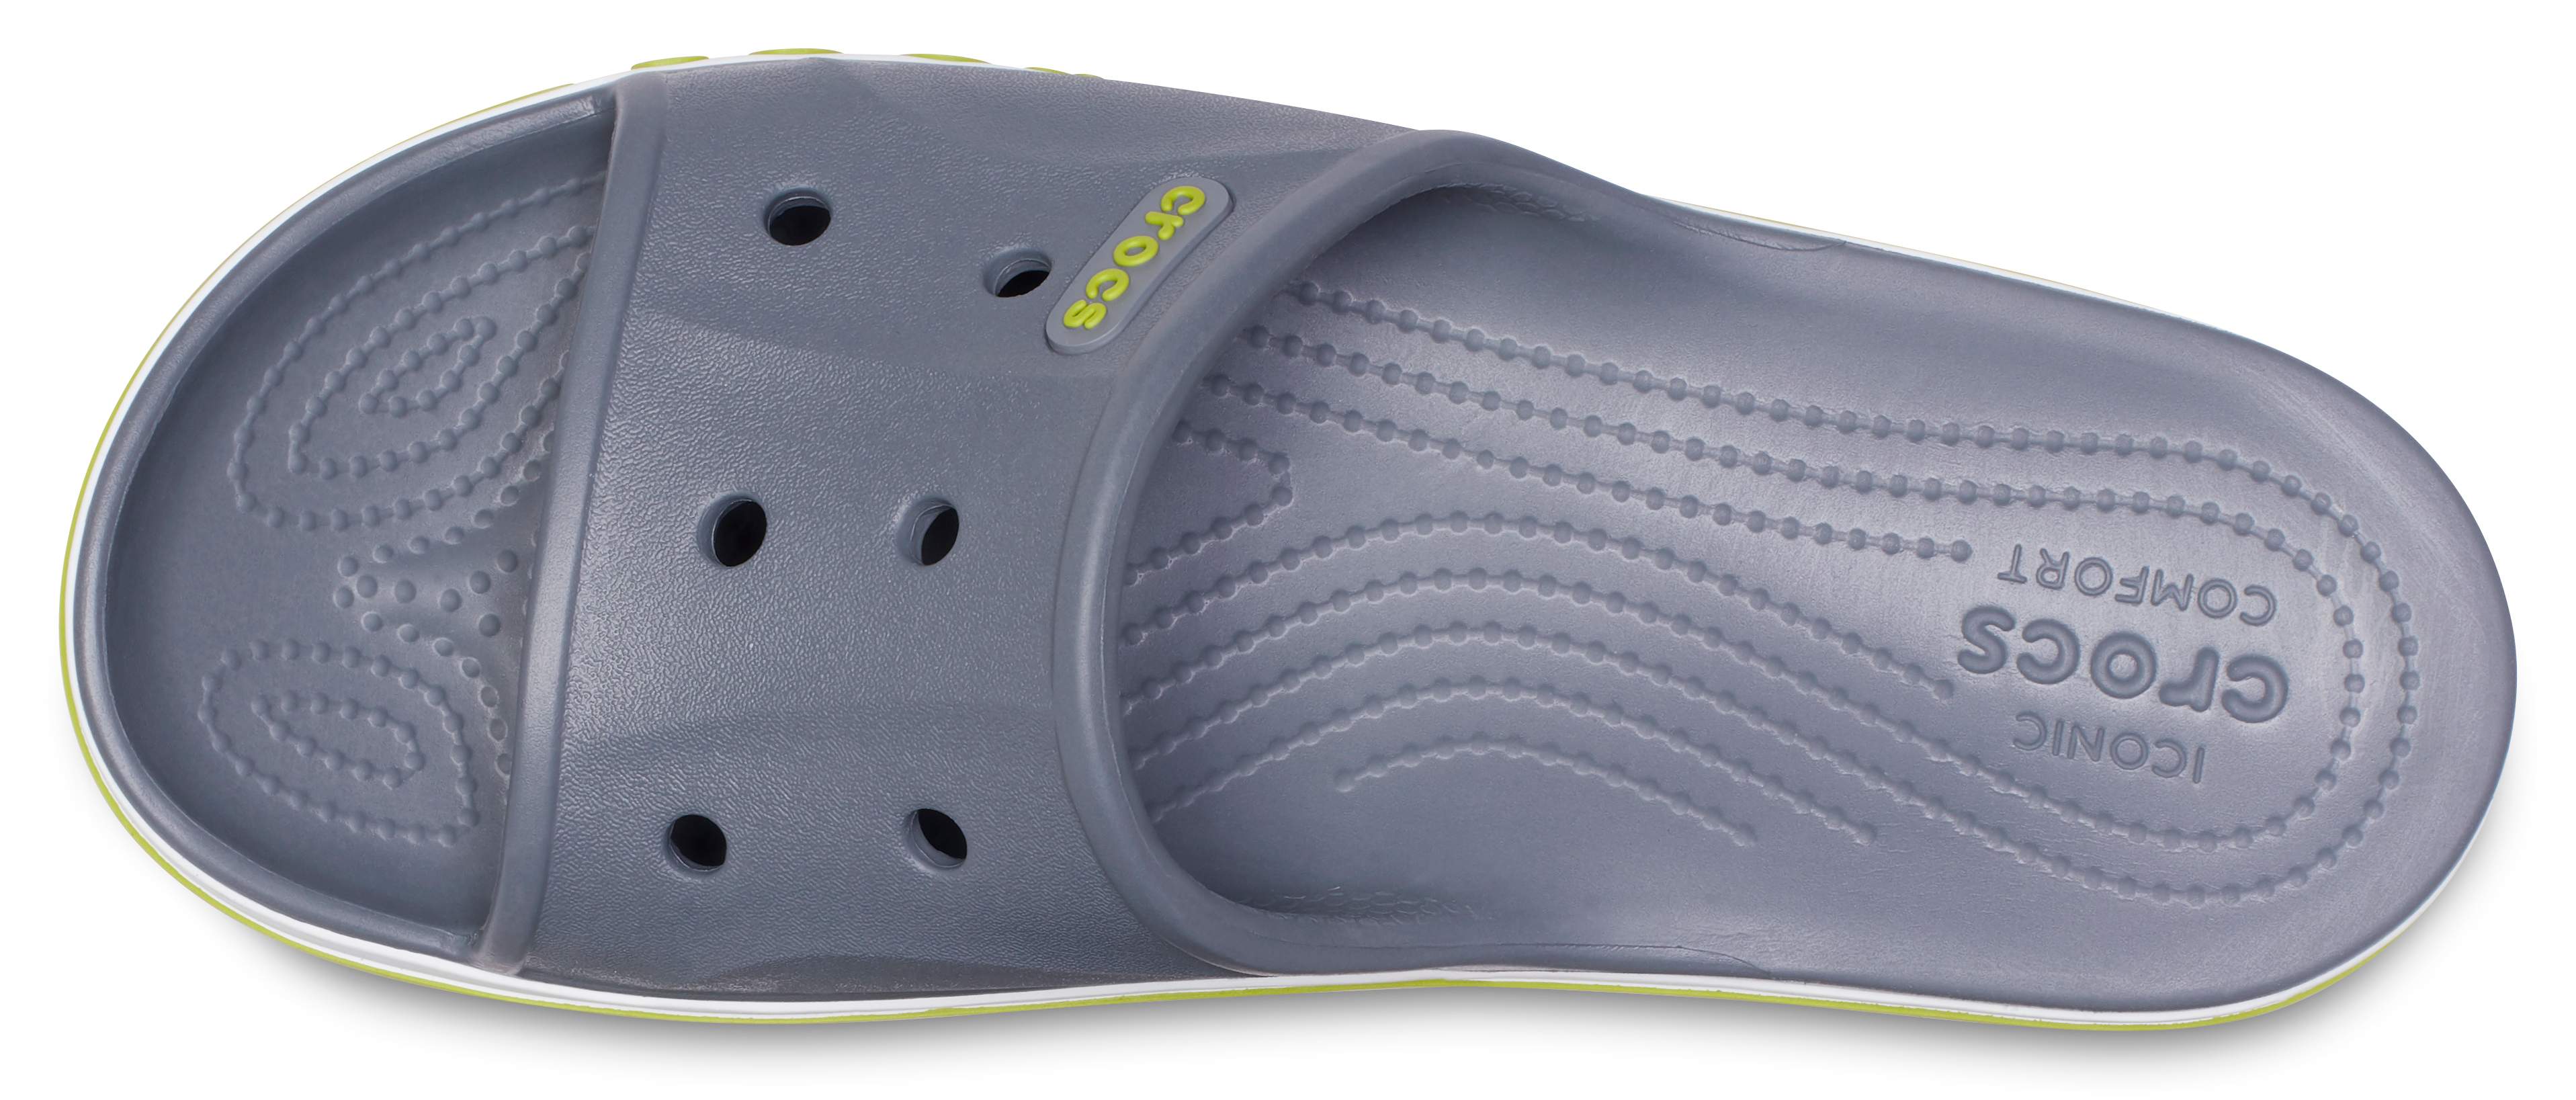 crocs comfort